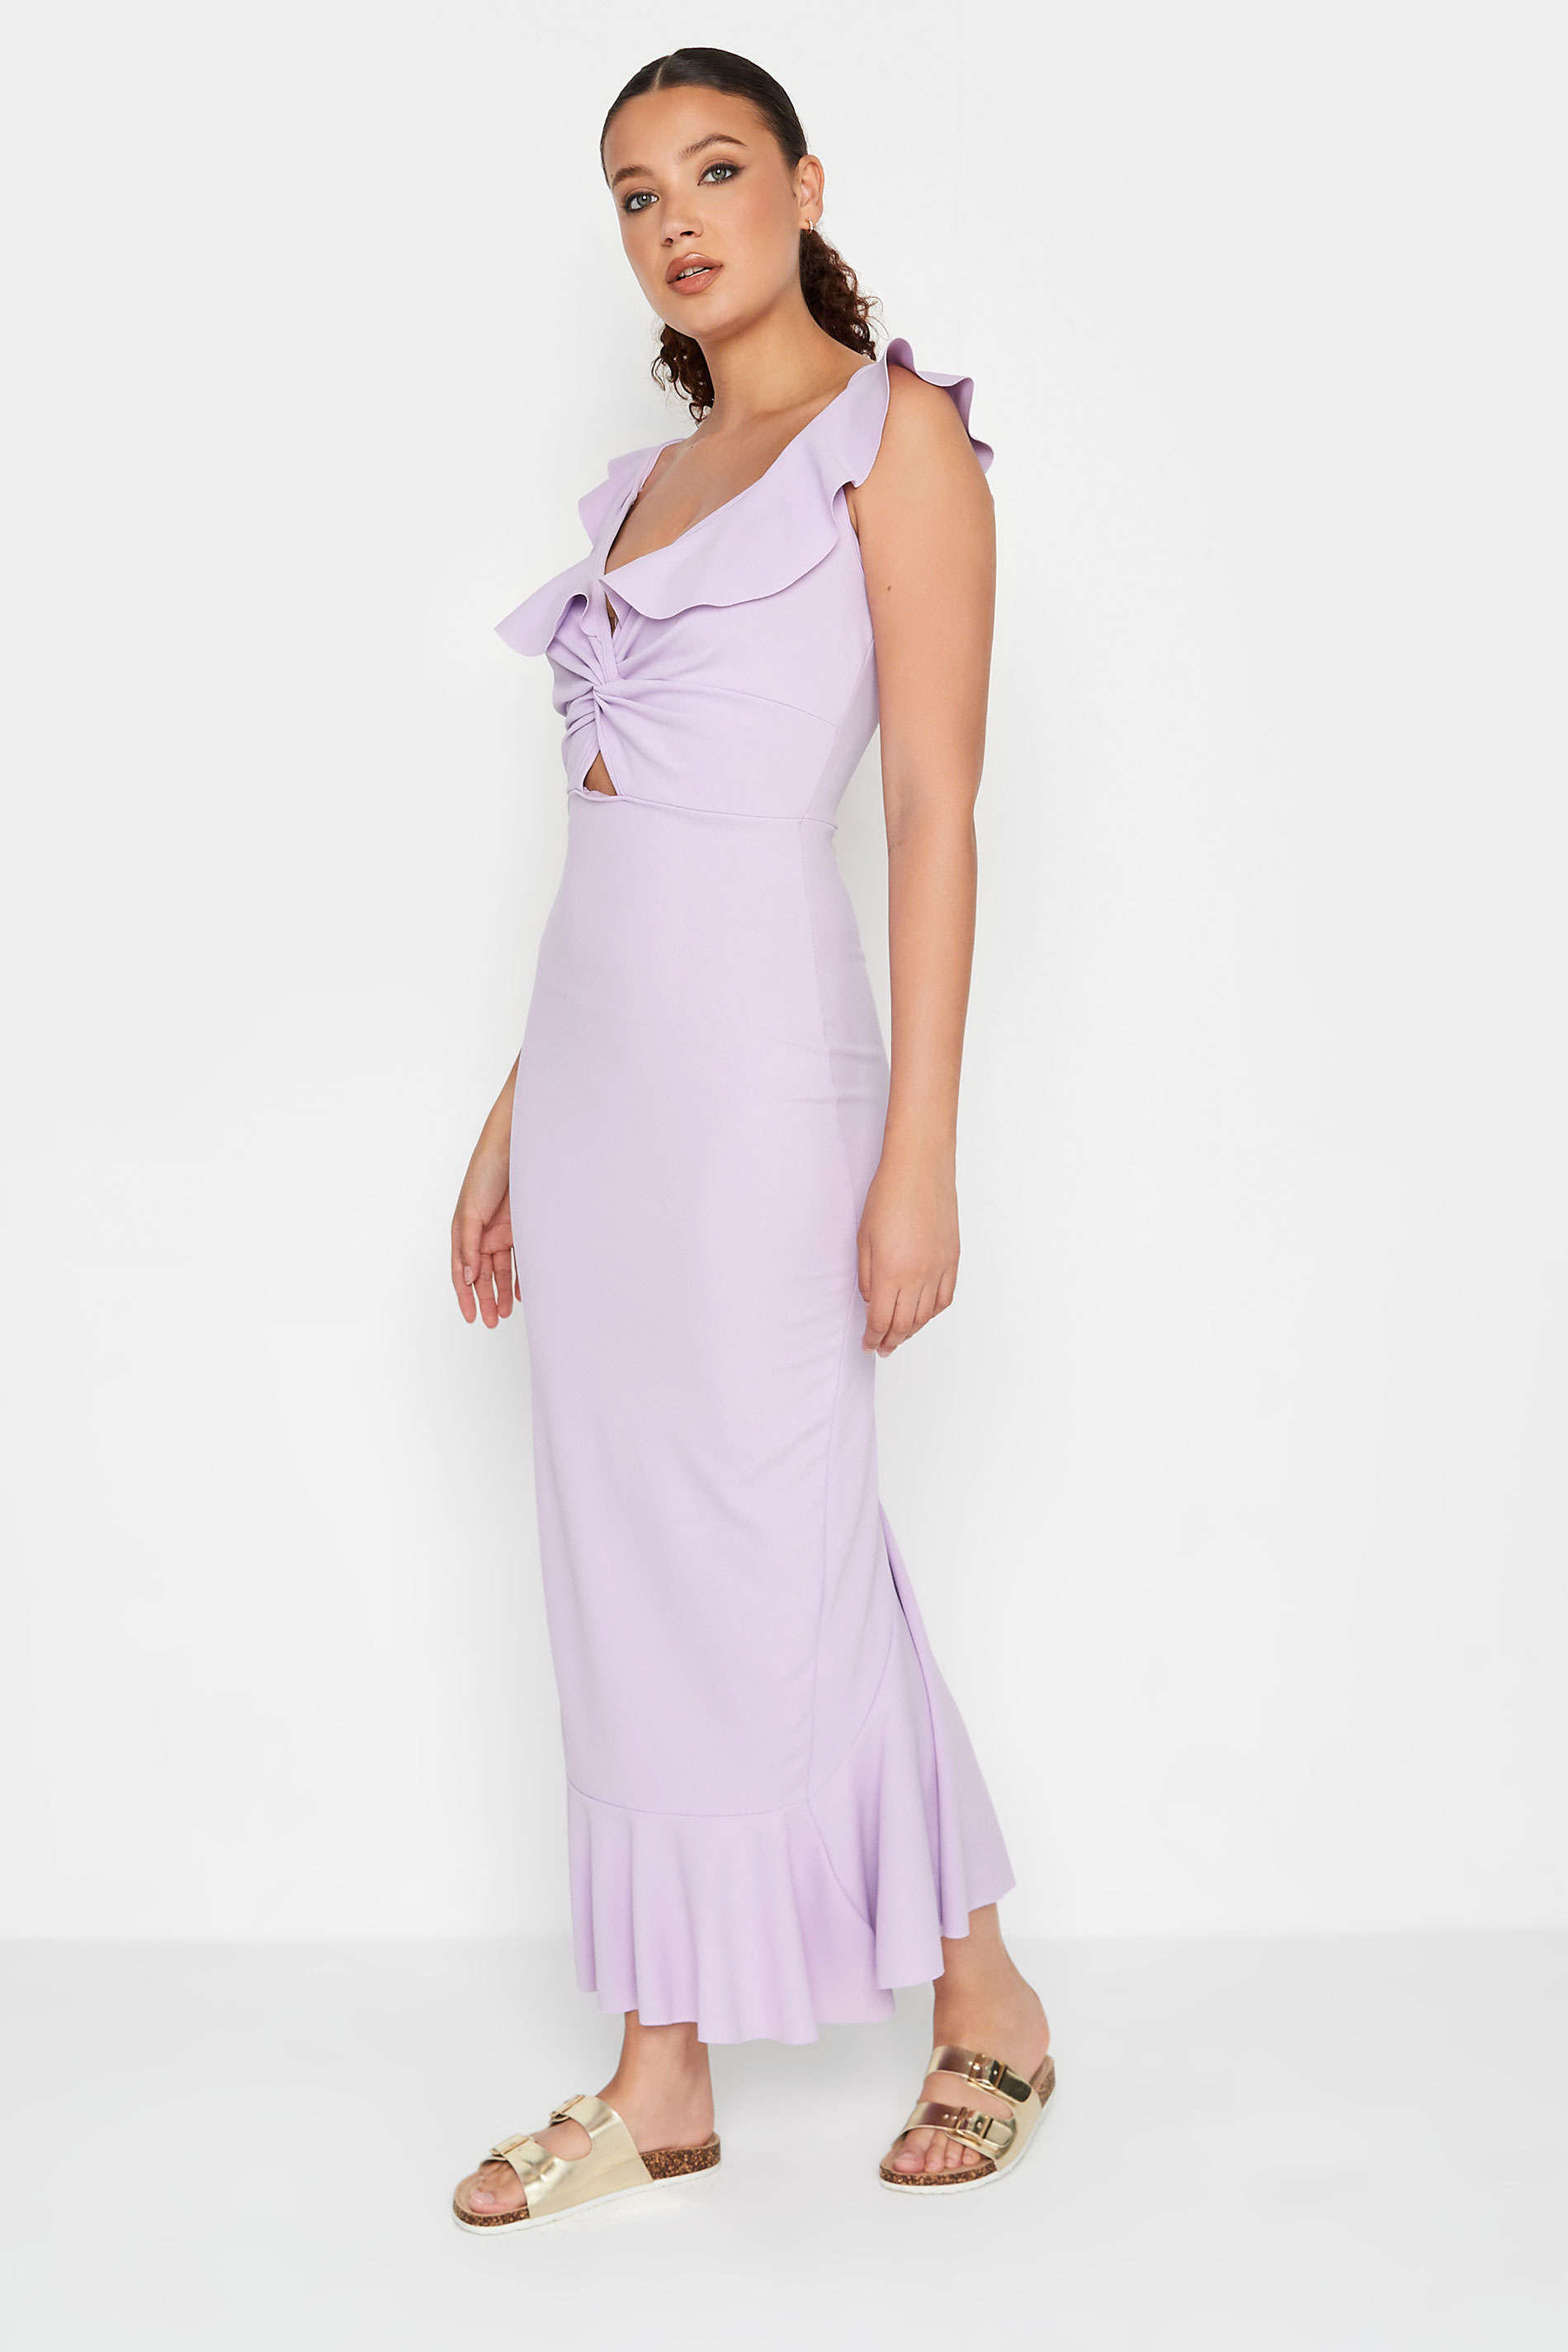 LTS Tall Women's Lilac Purple Cut Out Frill Midaxi Dress | Long Tall Sally 2